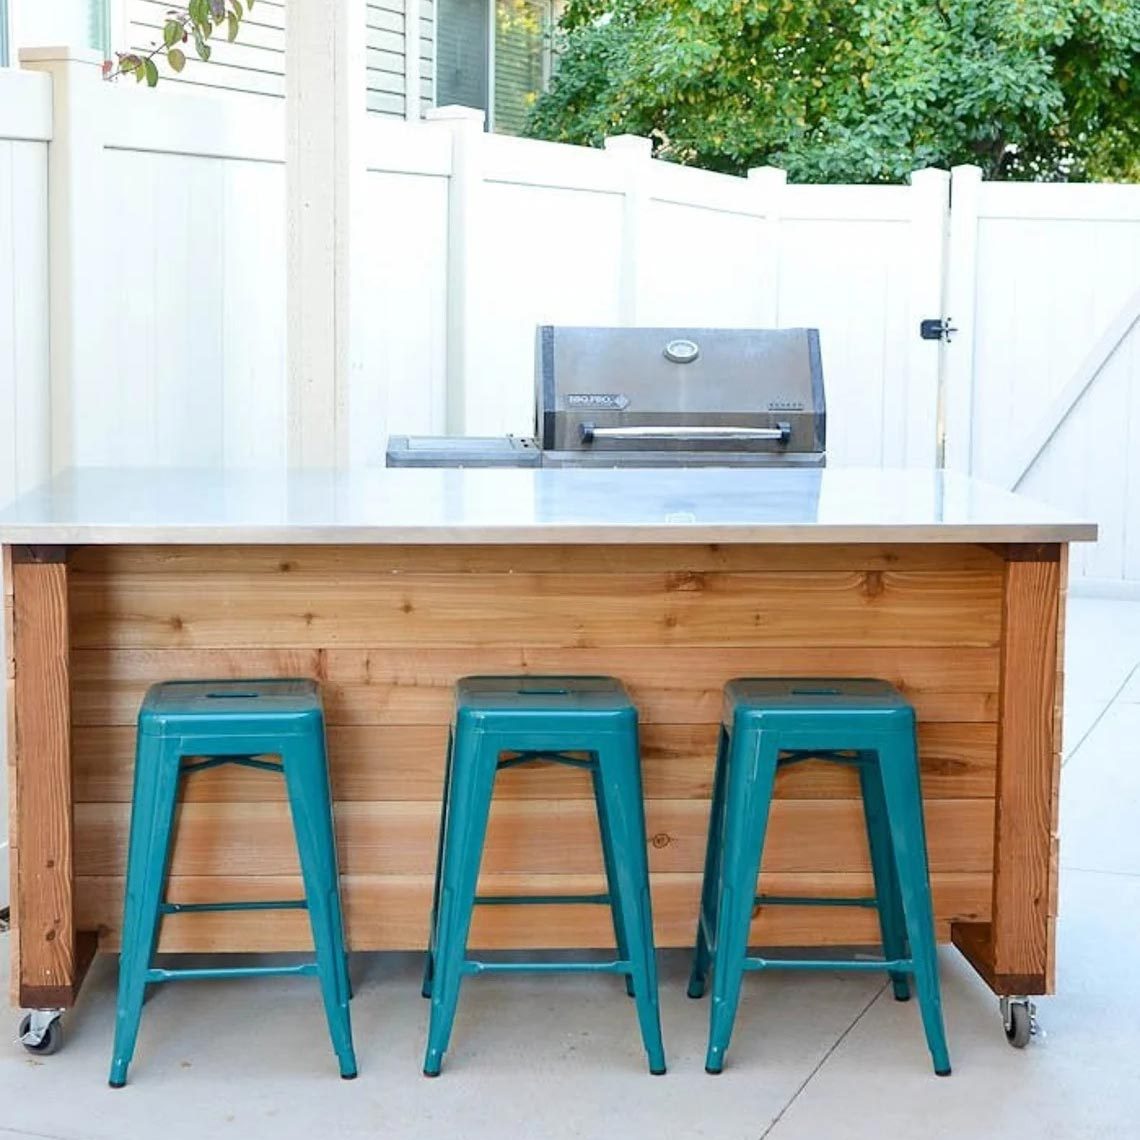 8 DIY Outdoor Kitchen Bar Island Idea Via HousefulofHandmade Etsy.com  